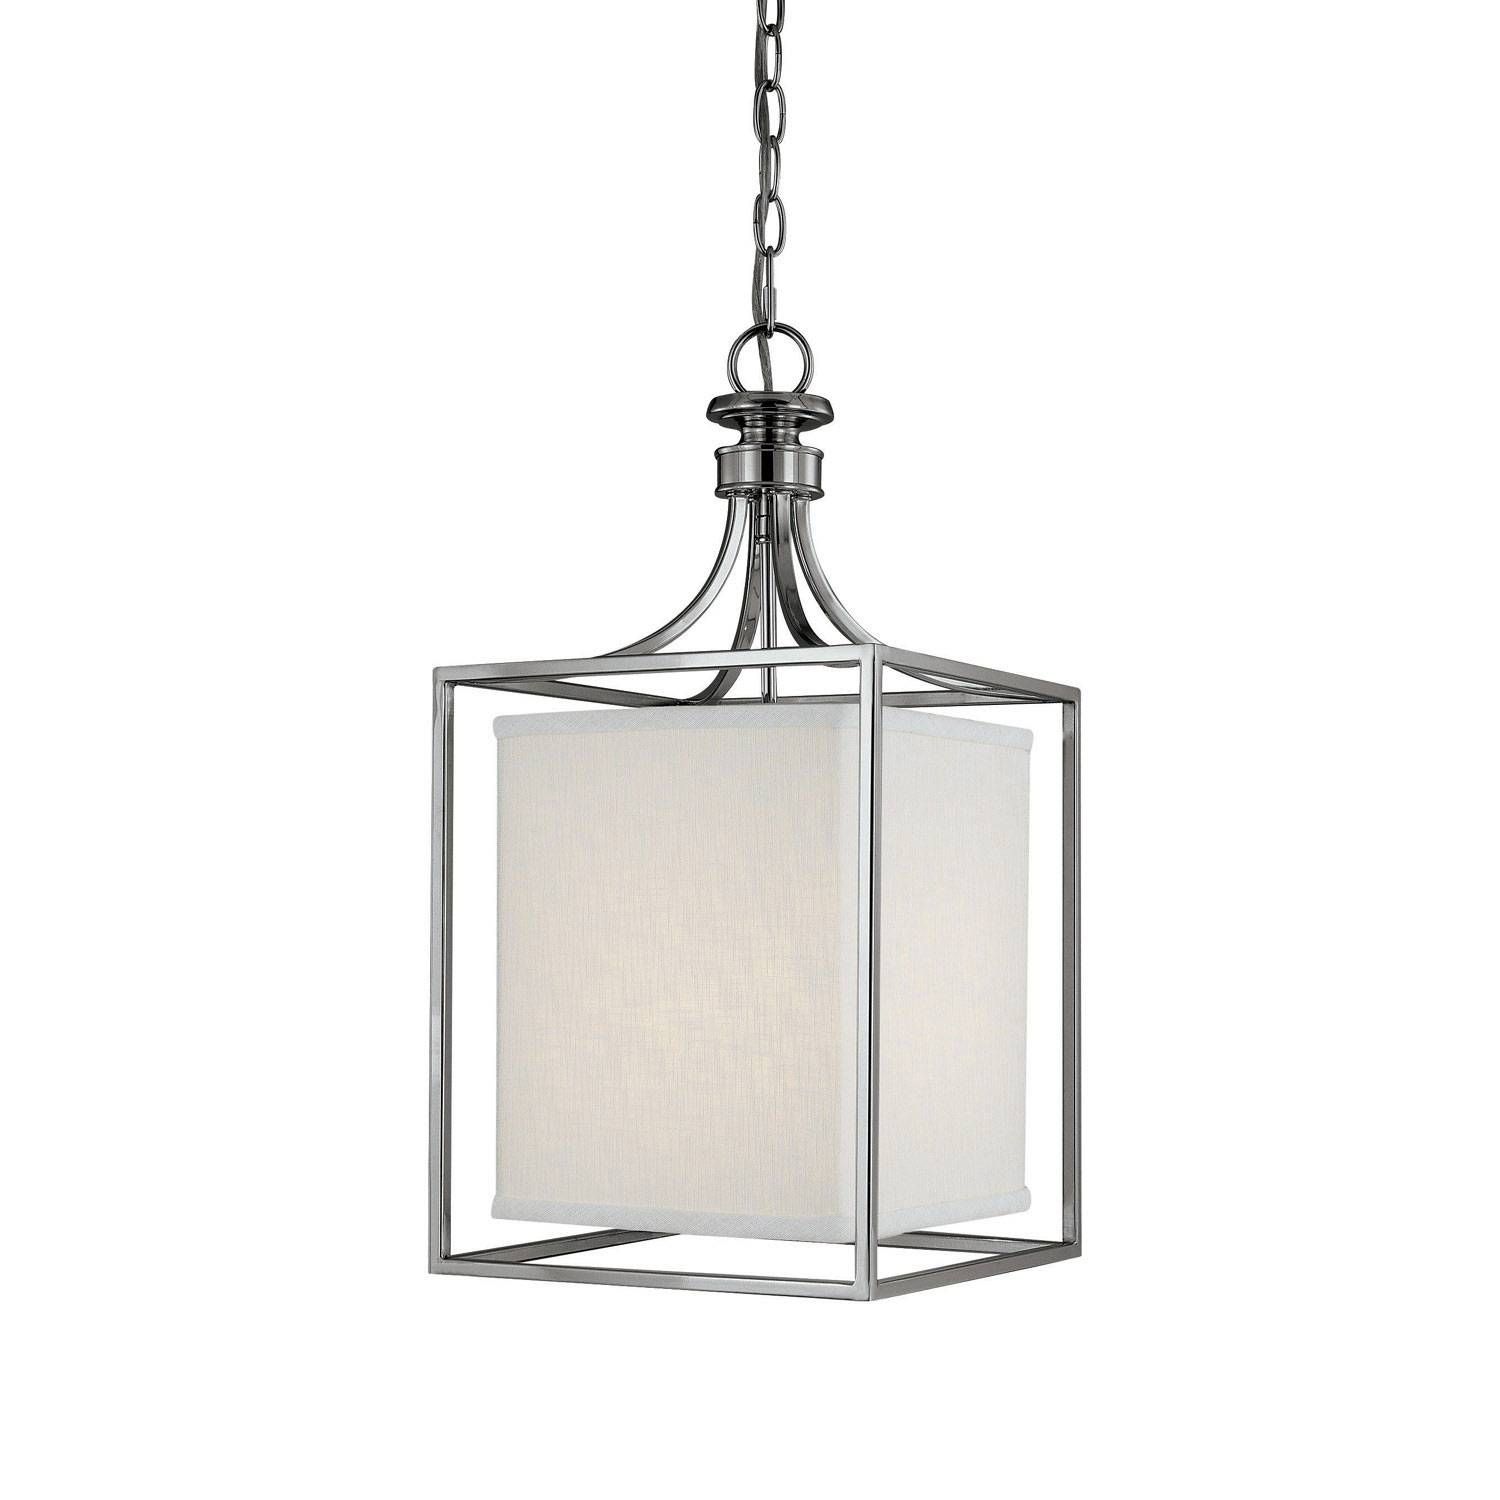 Elegant Lantern Pendant Light 99 In Outdoor Lighting Pendants With Intended For Lantern Style Pendants (View 14 of 15)